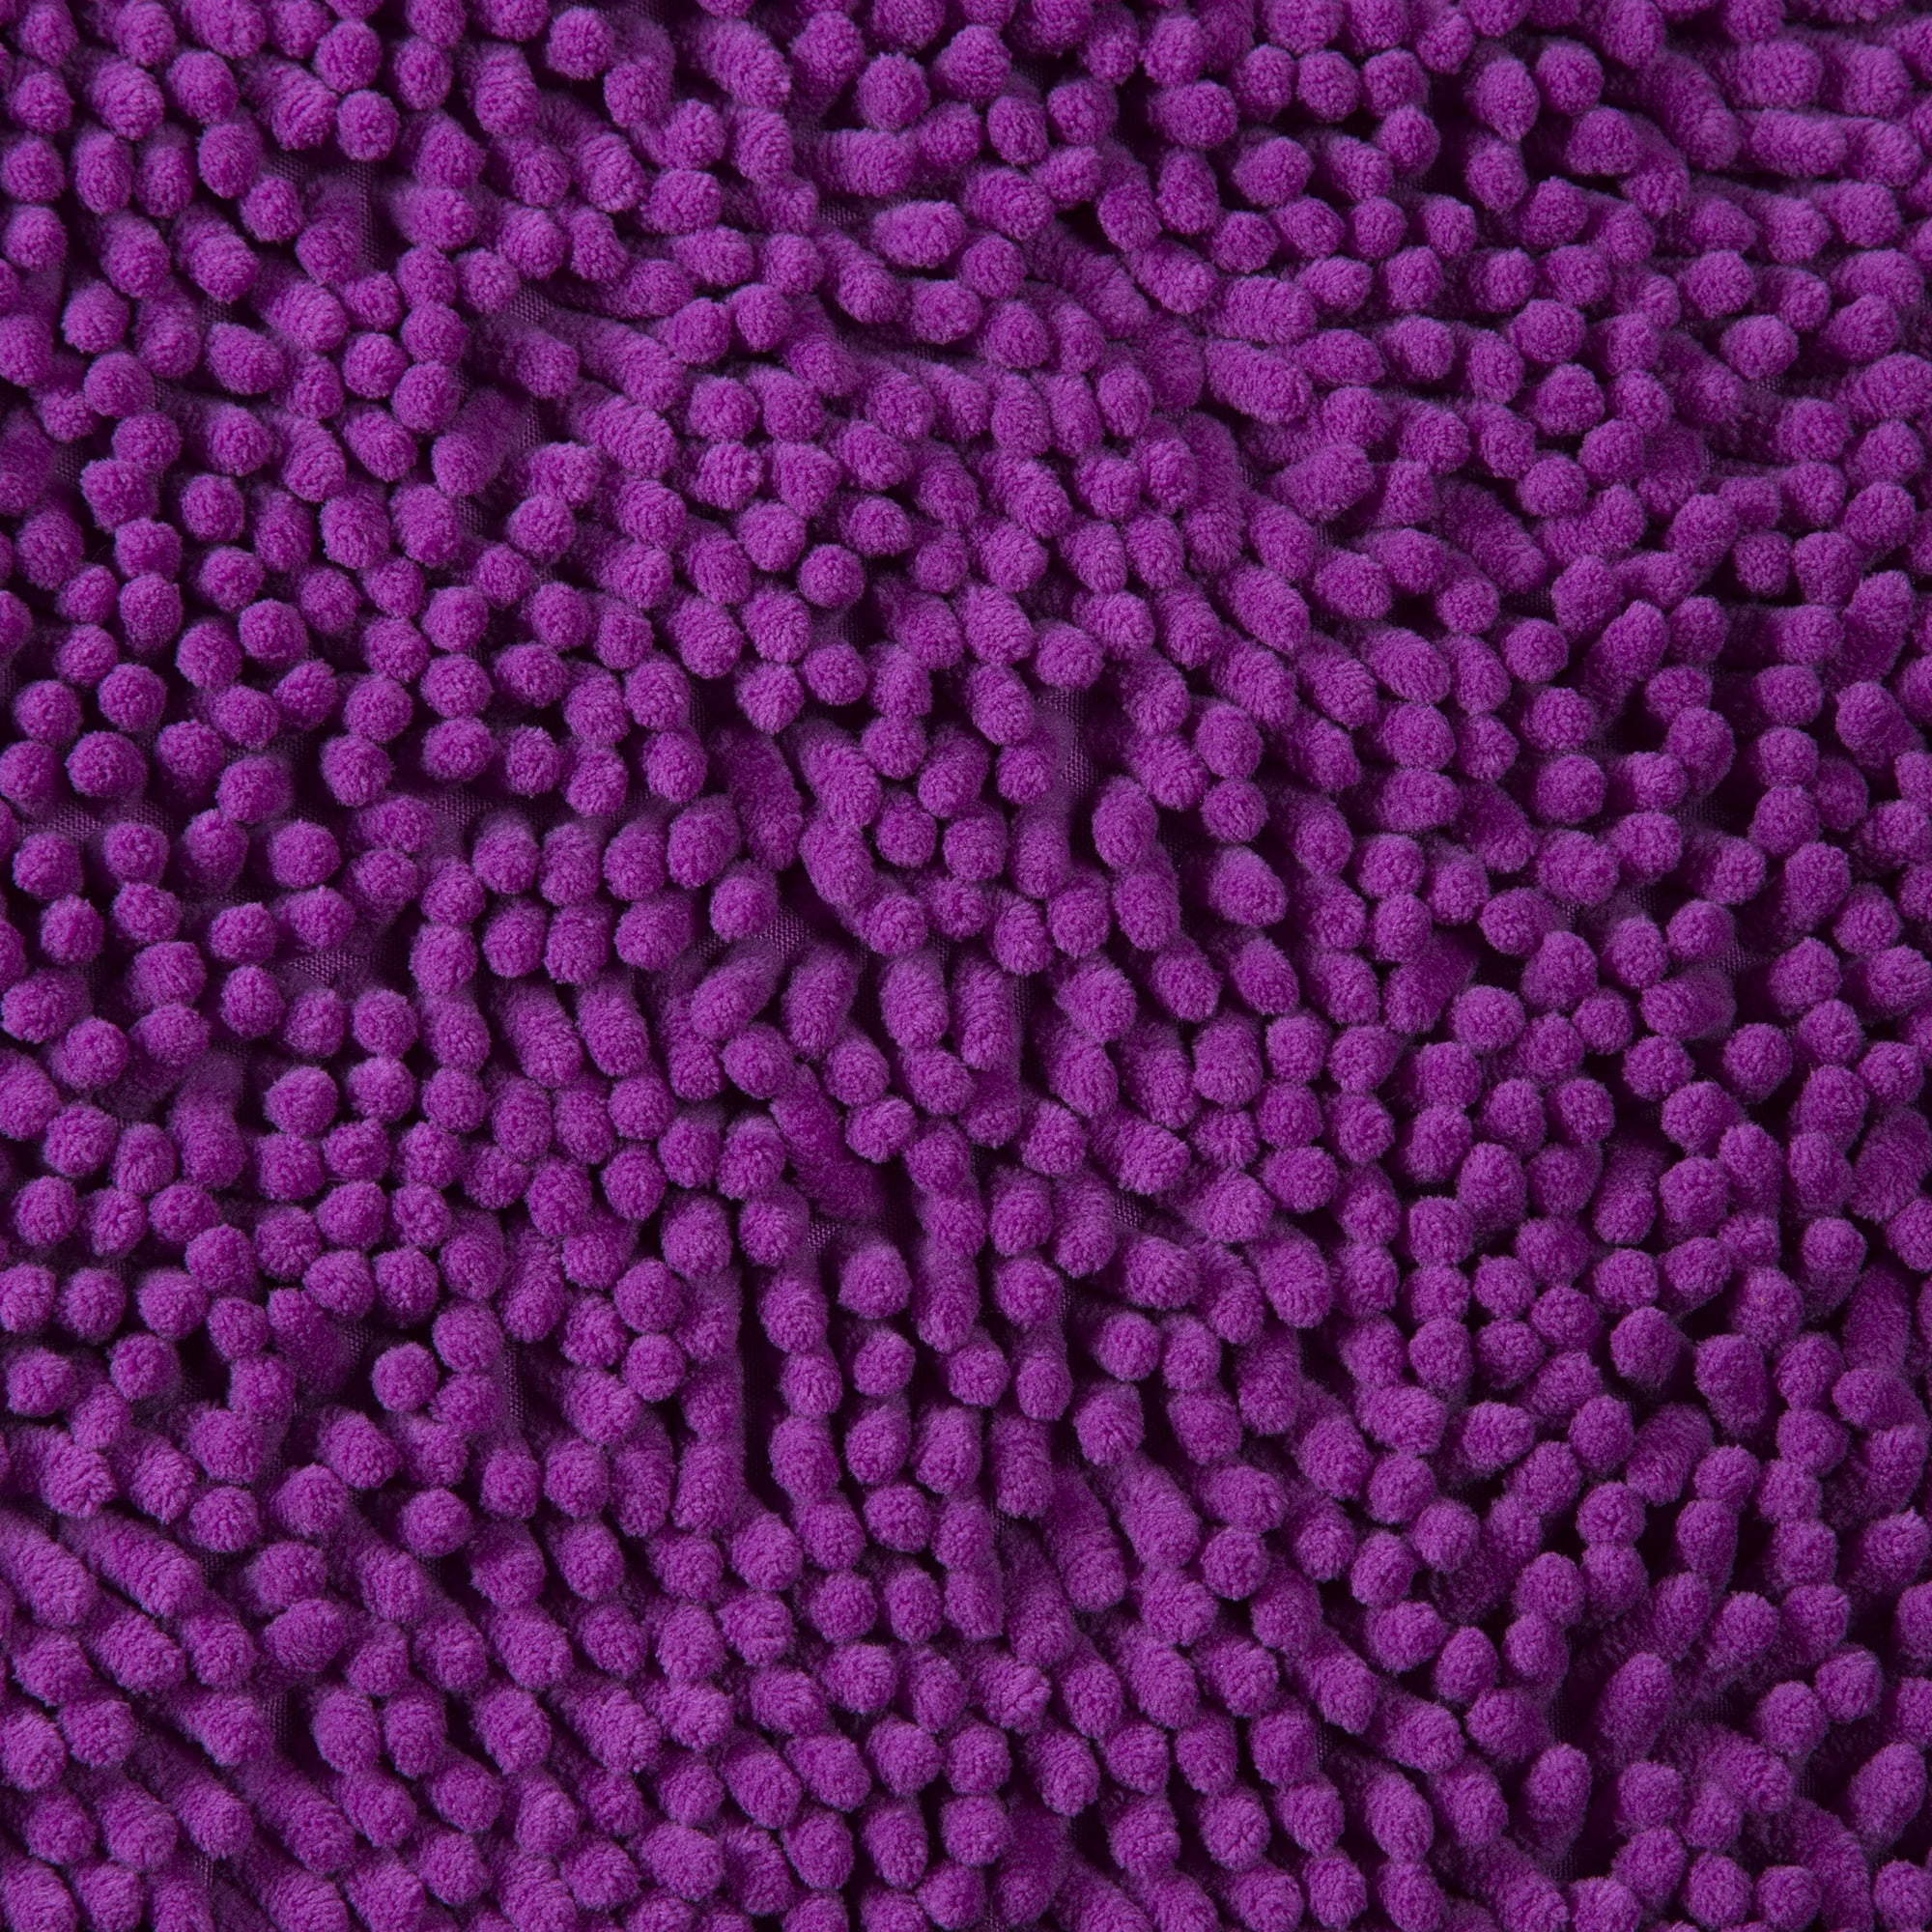 Indulgence Bliss Bath Mat - Home Dynamix - Purple - 20x30